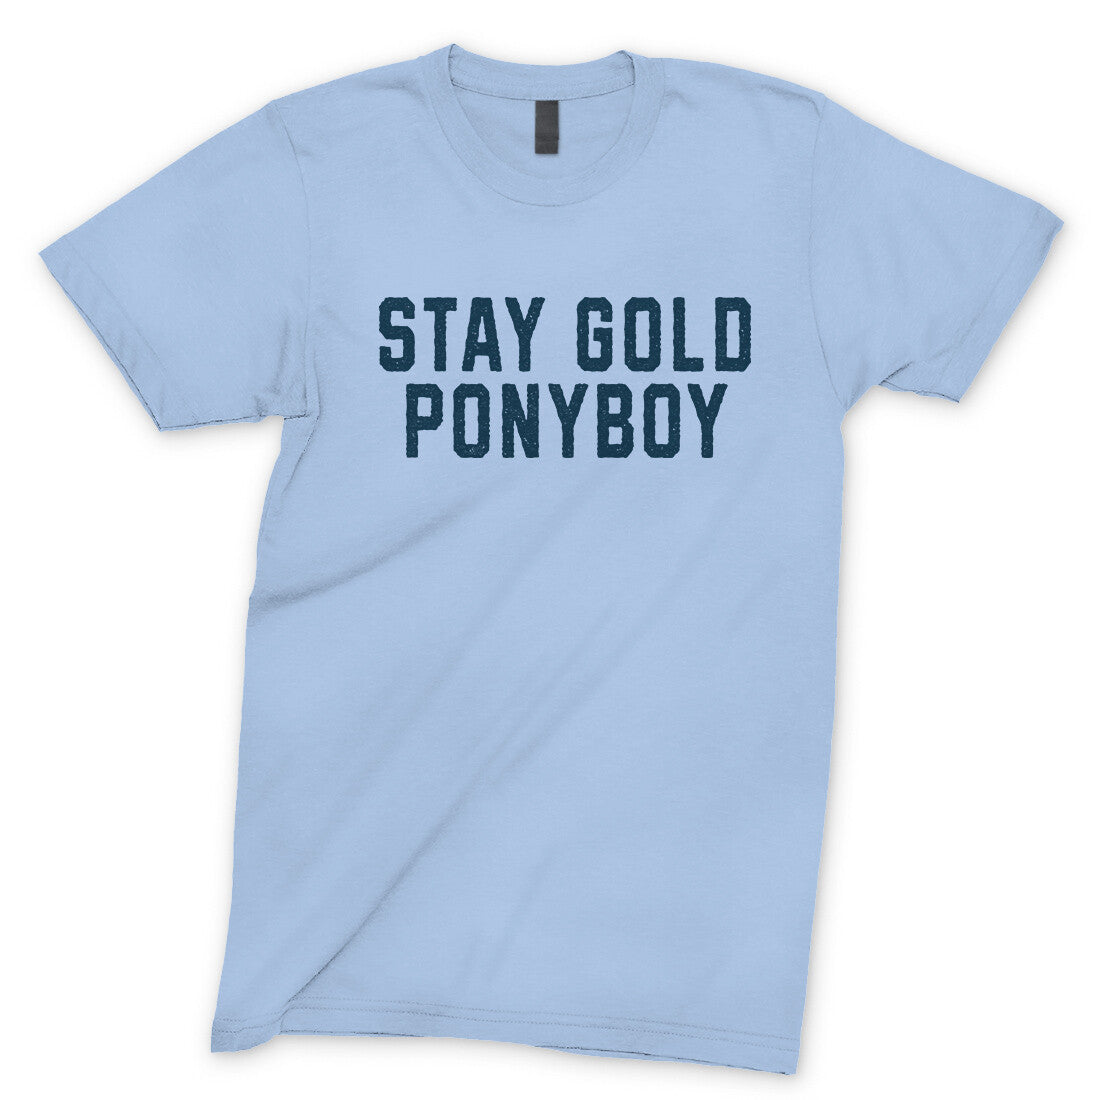 Stay Gold Ponyboy in Light Blue Color